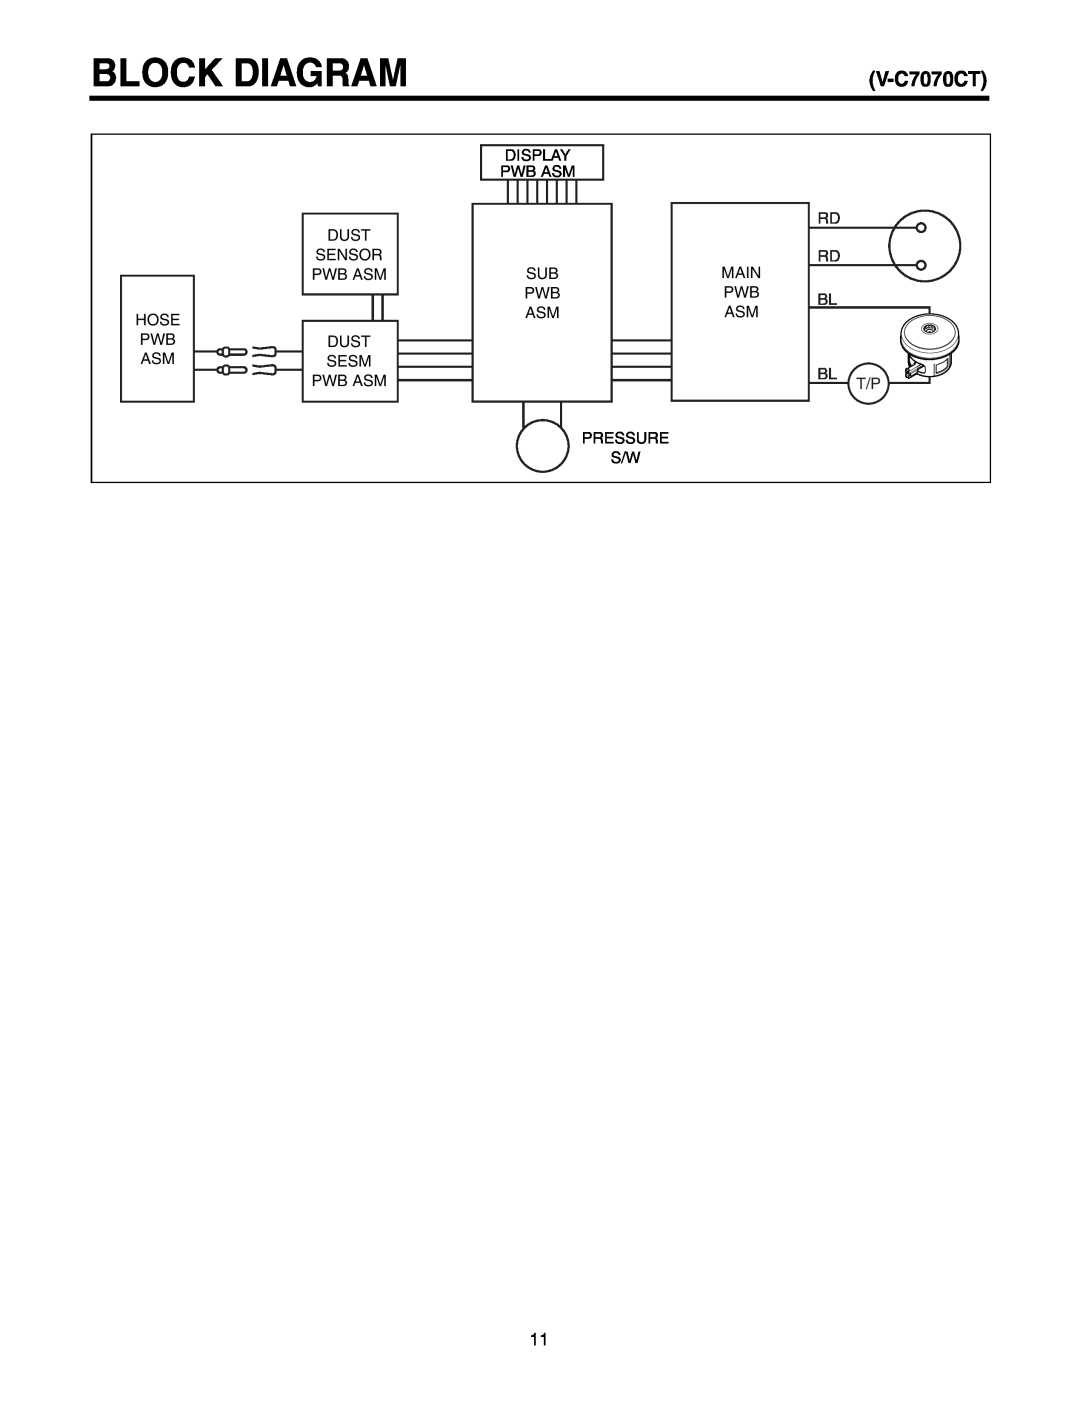 LG Electronics V-C7050NT, V-C7070CP, V-C7050HT service manual Block Diagram, V-C7070CT, Pressure 